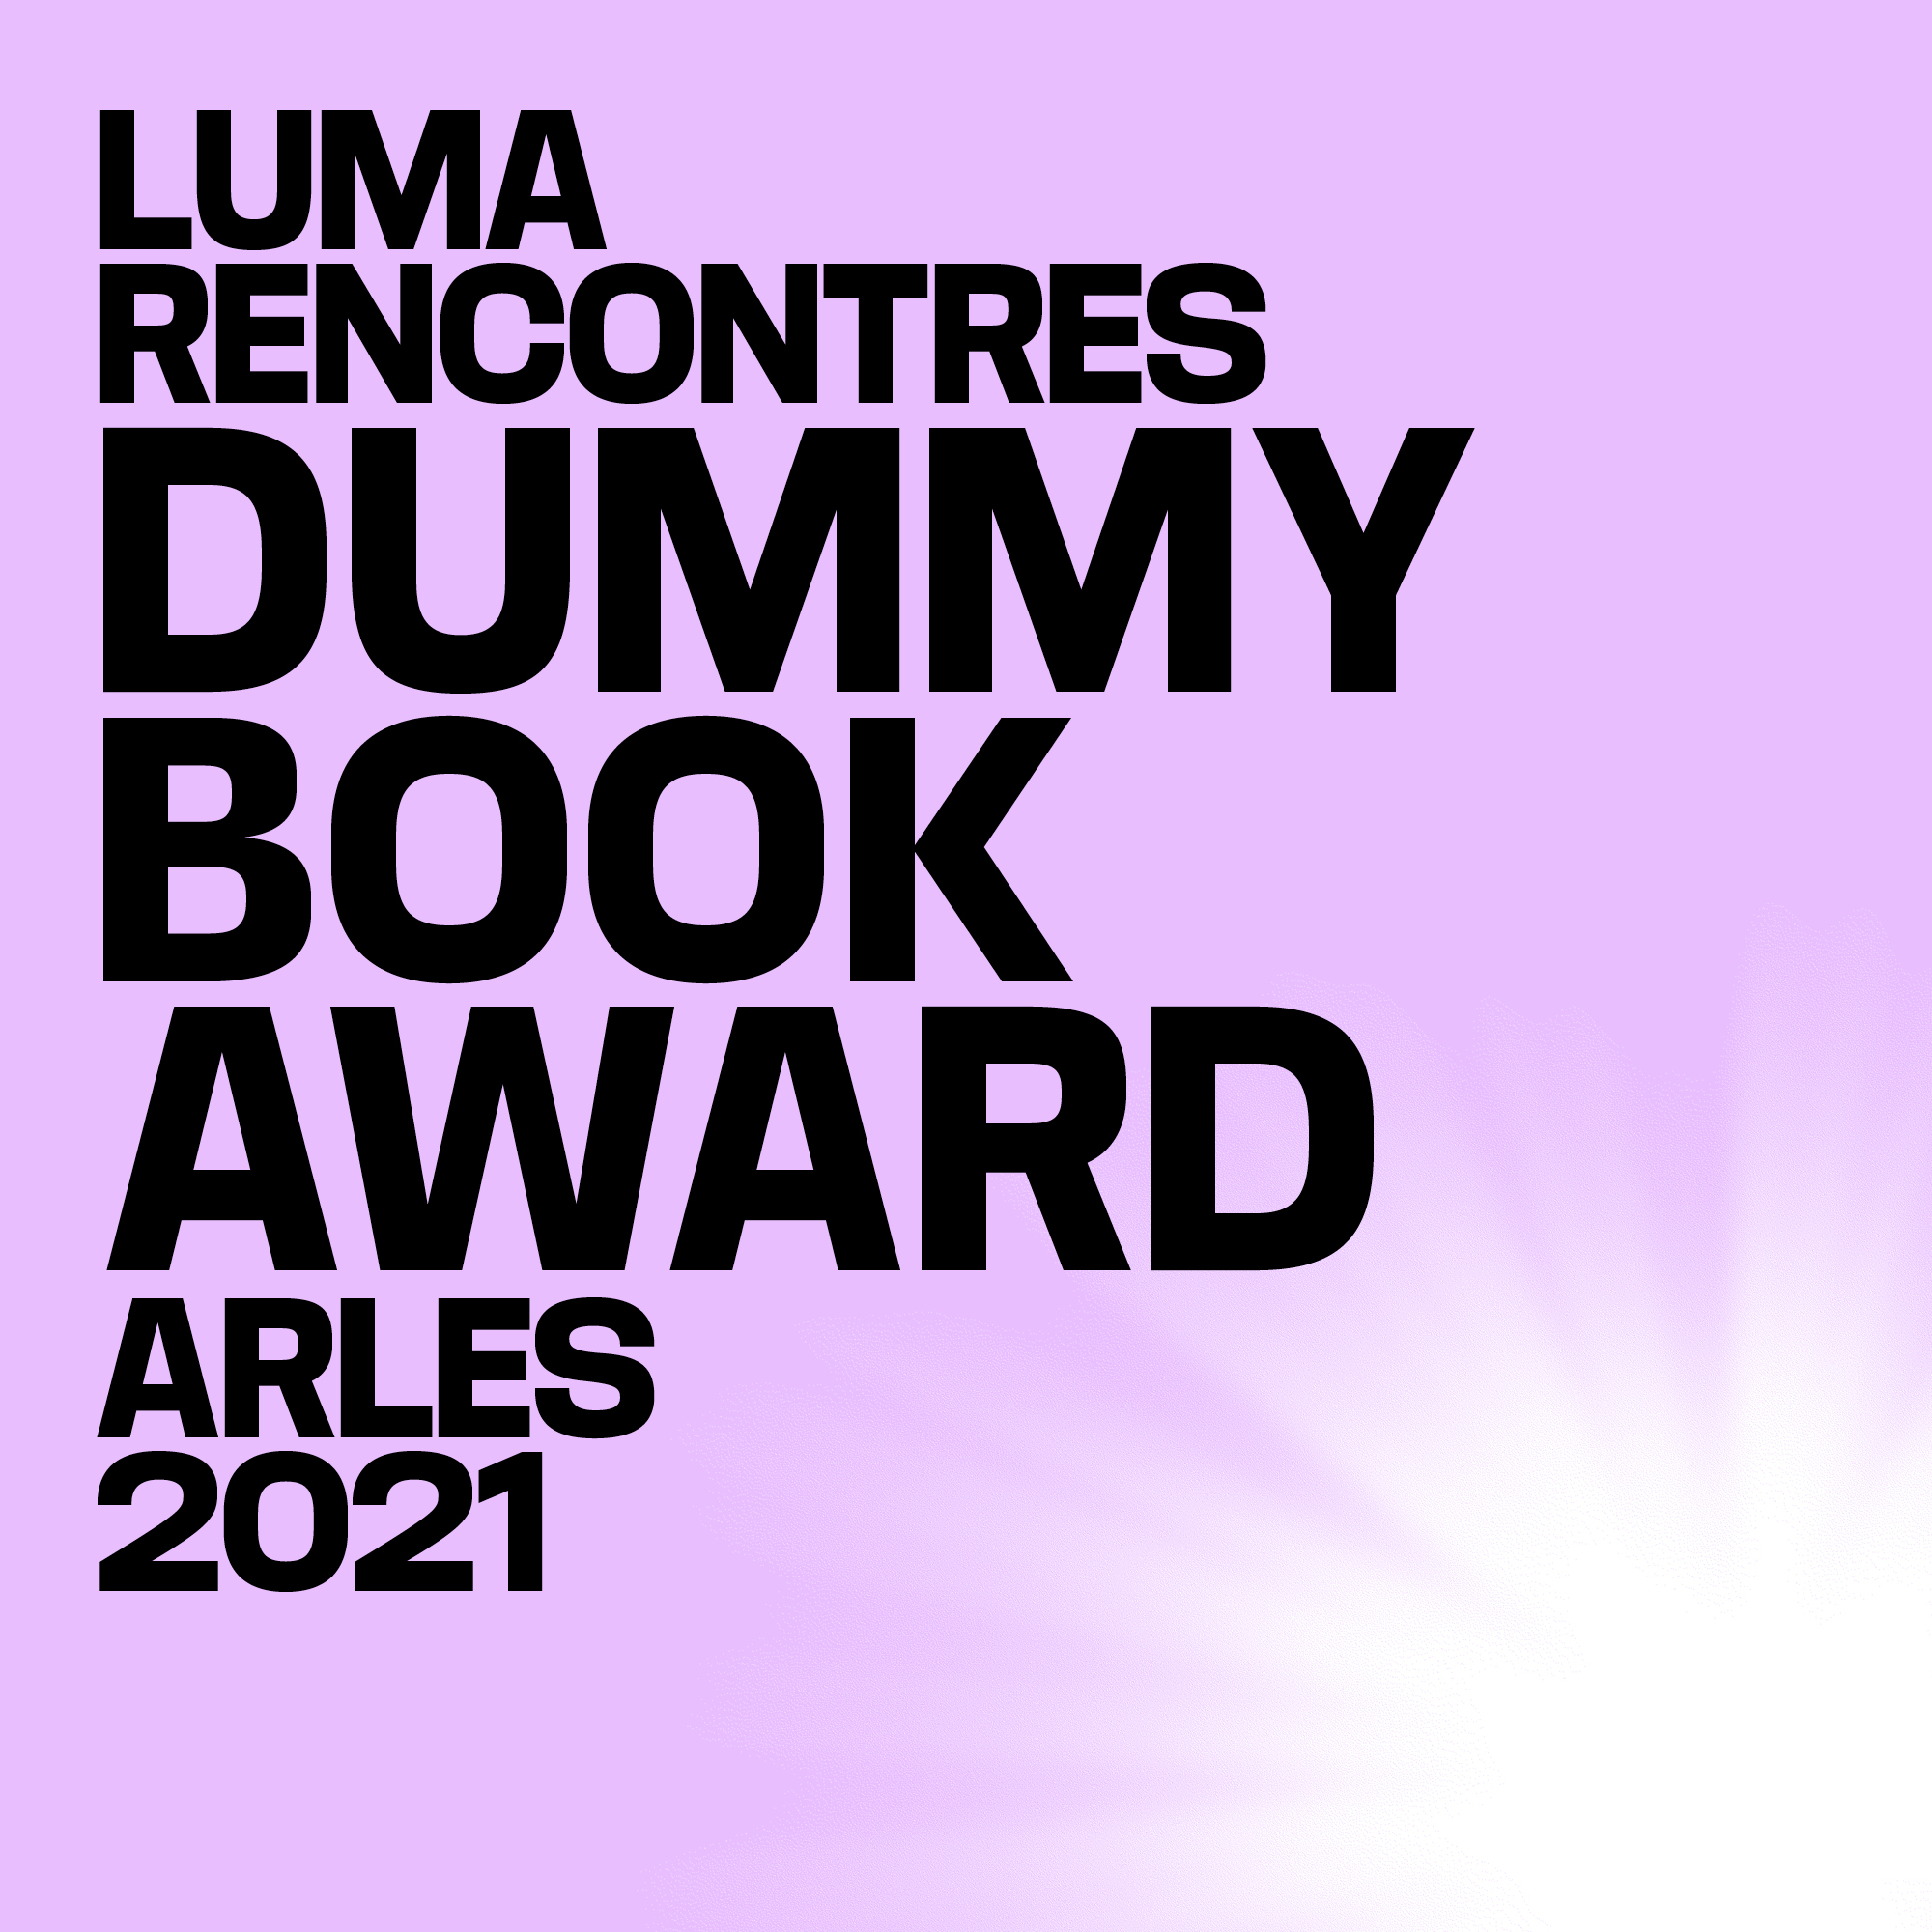 arles rencontres 2021 author book award